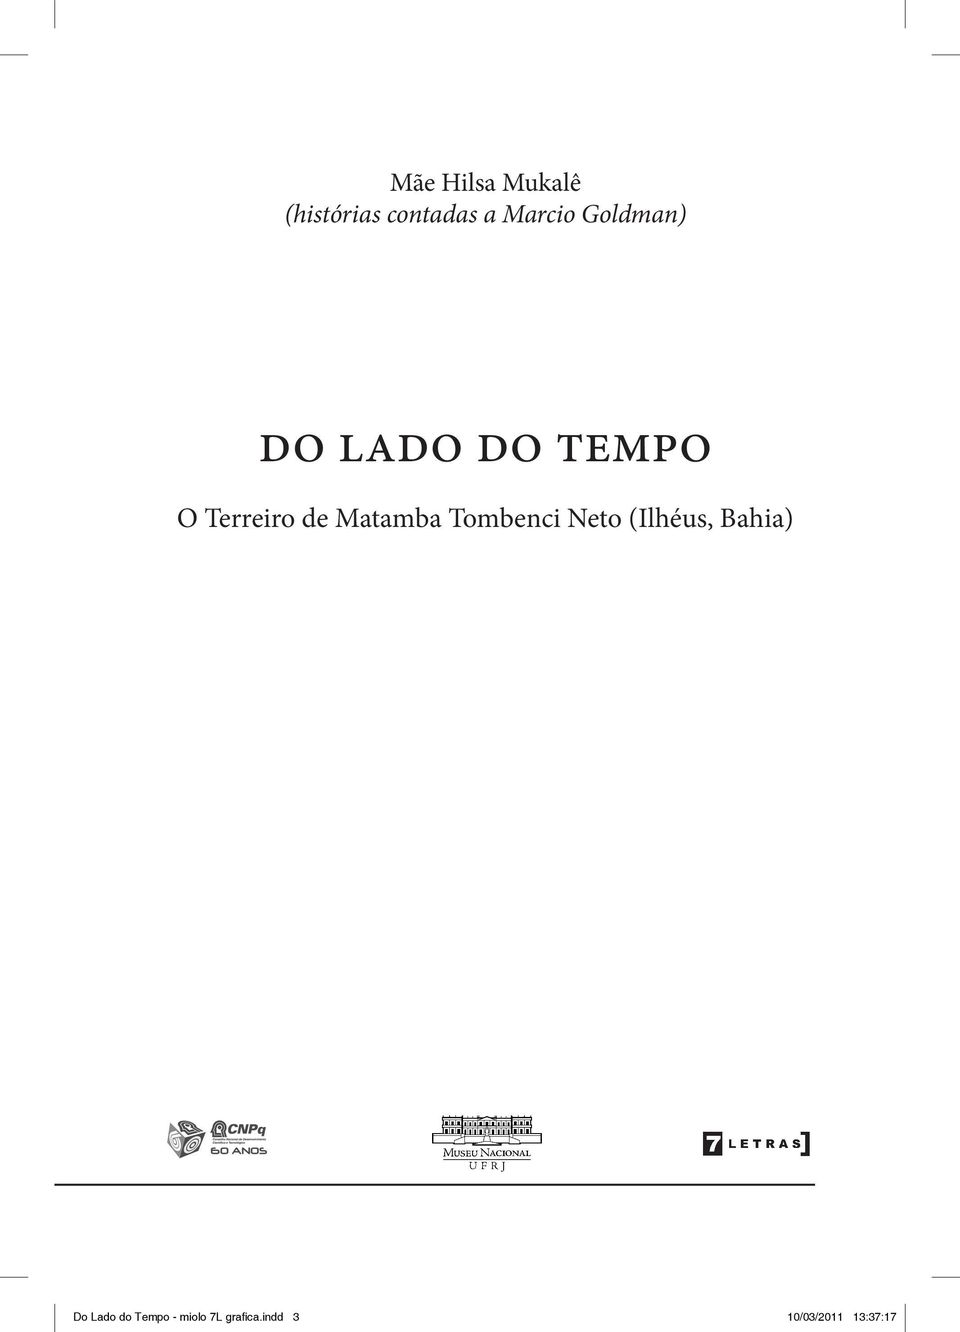 Matamba Tombenci Neto (Ilhéus, Bahia) Do Lado